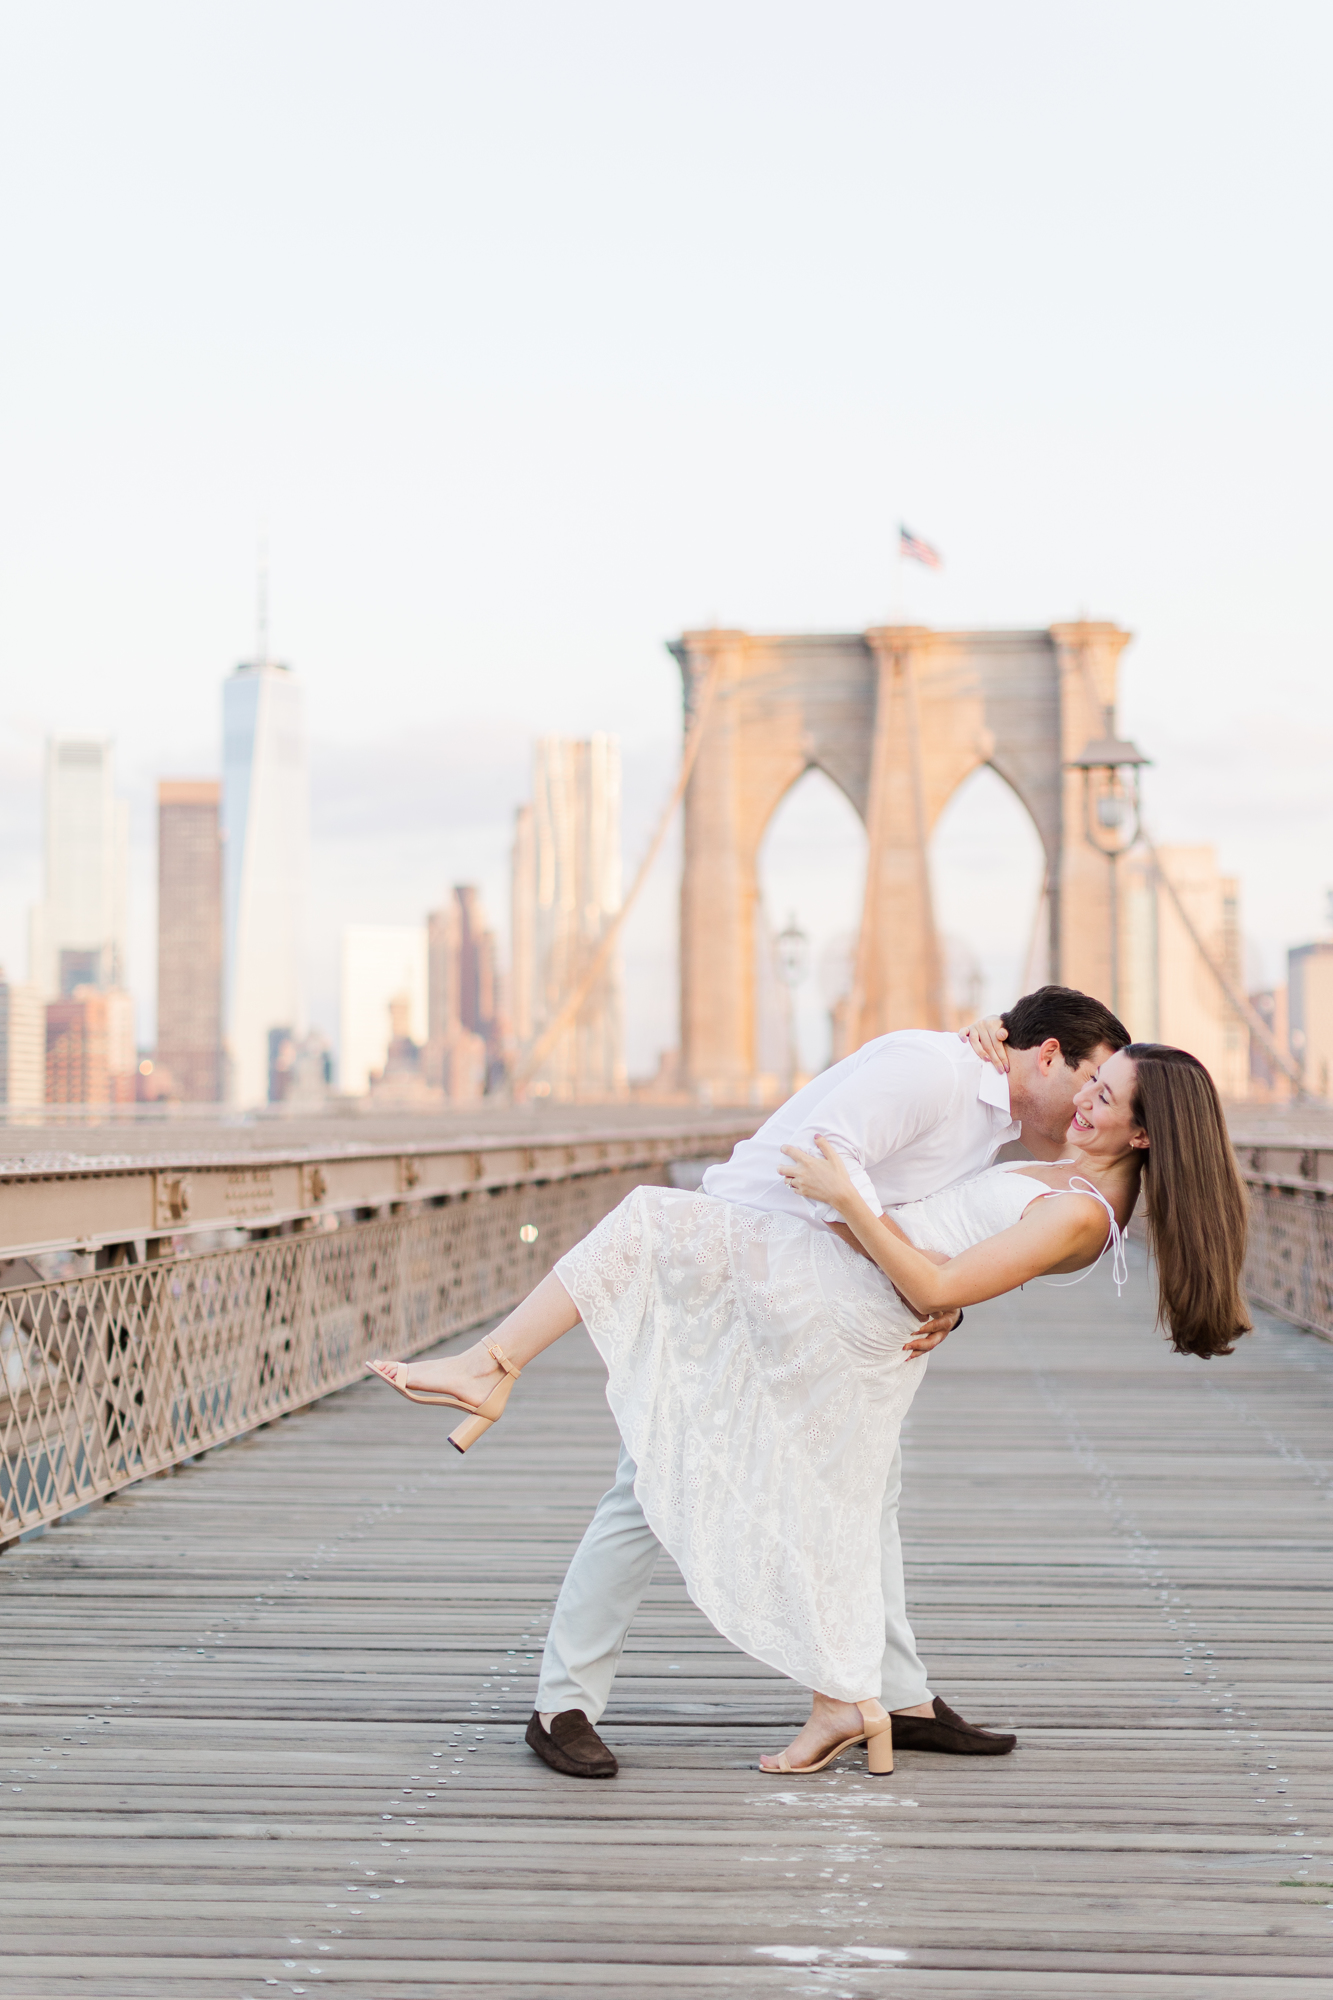 Awesome Brooklyn Bridge Engagement Photography